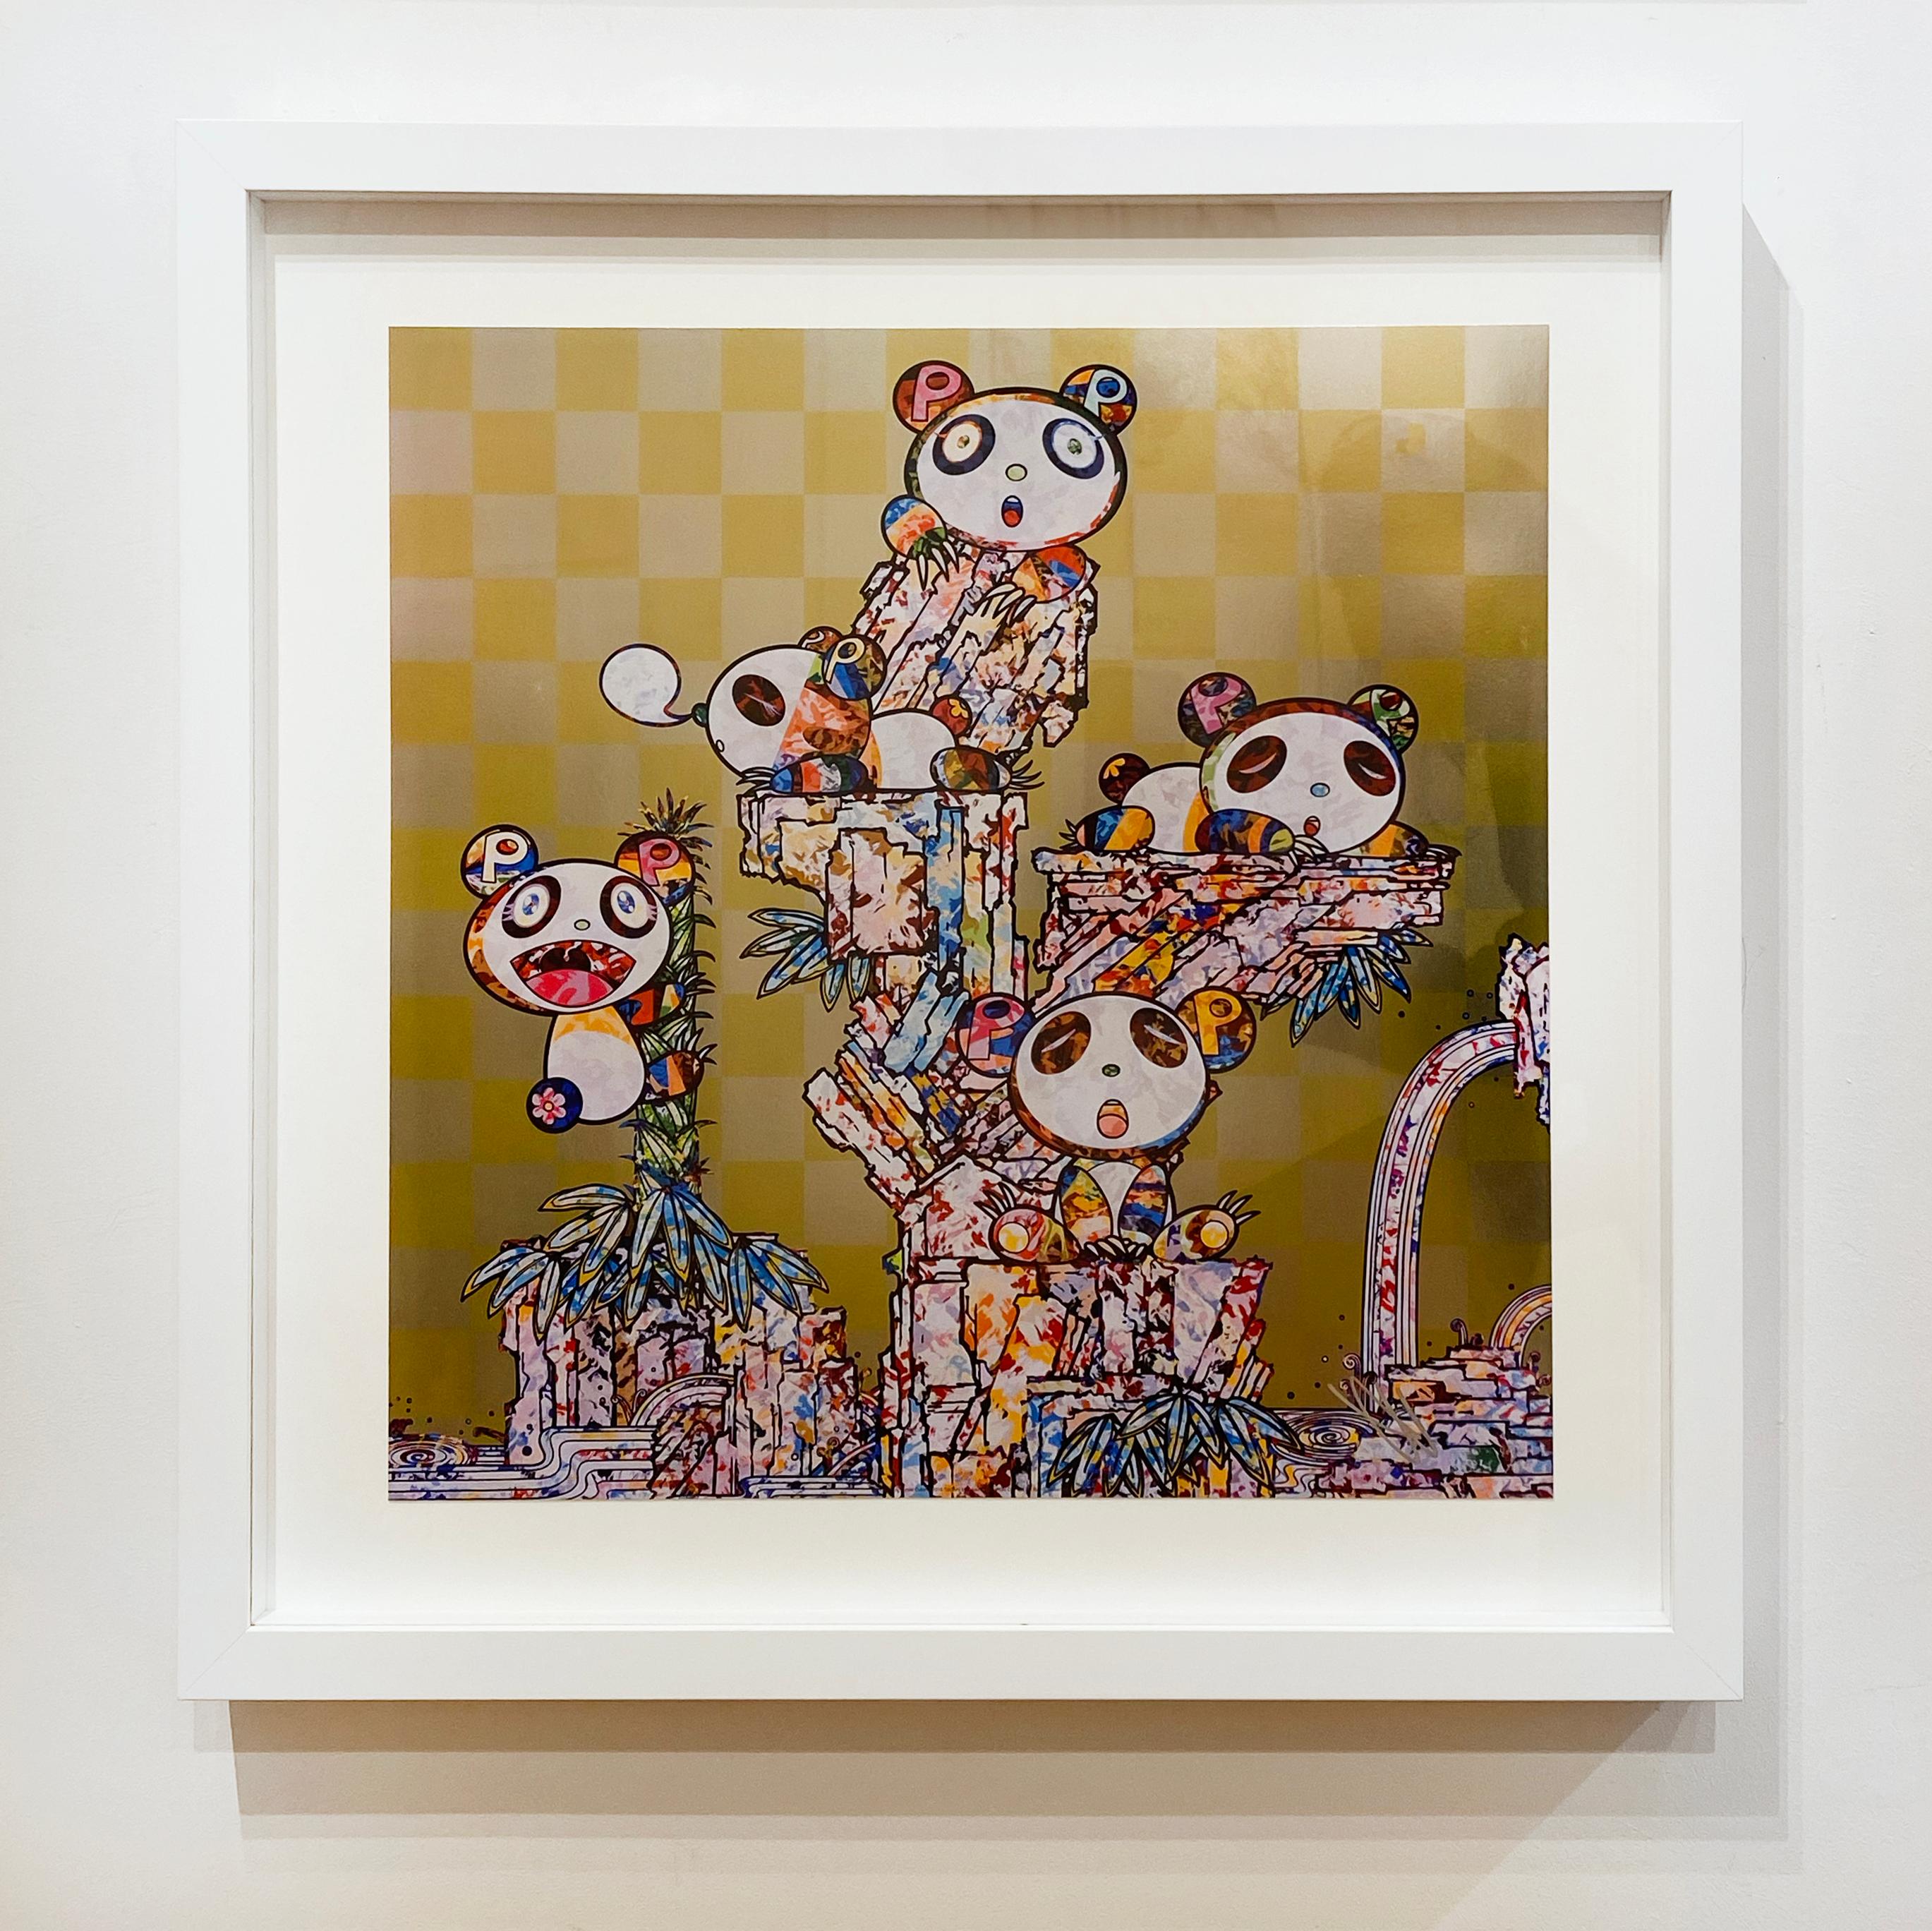 Panda Cubs Panda Cubs - Contemporary Print by Takashi Murakami